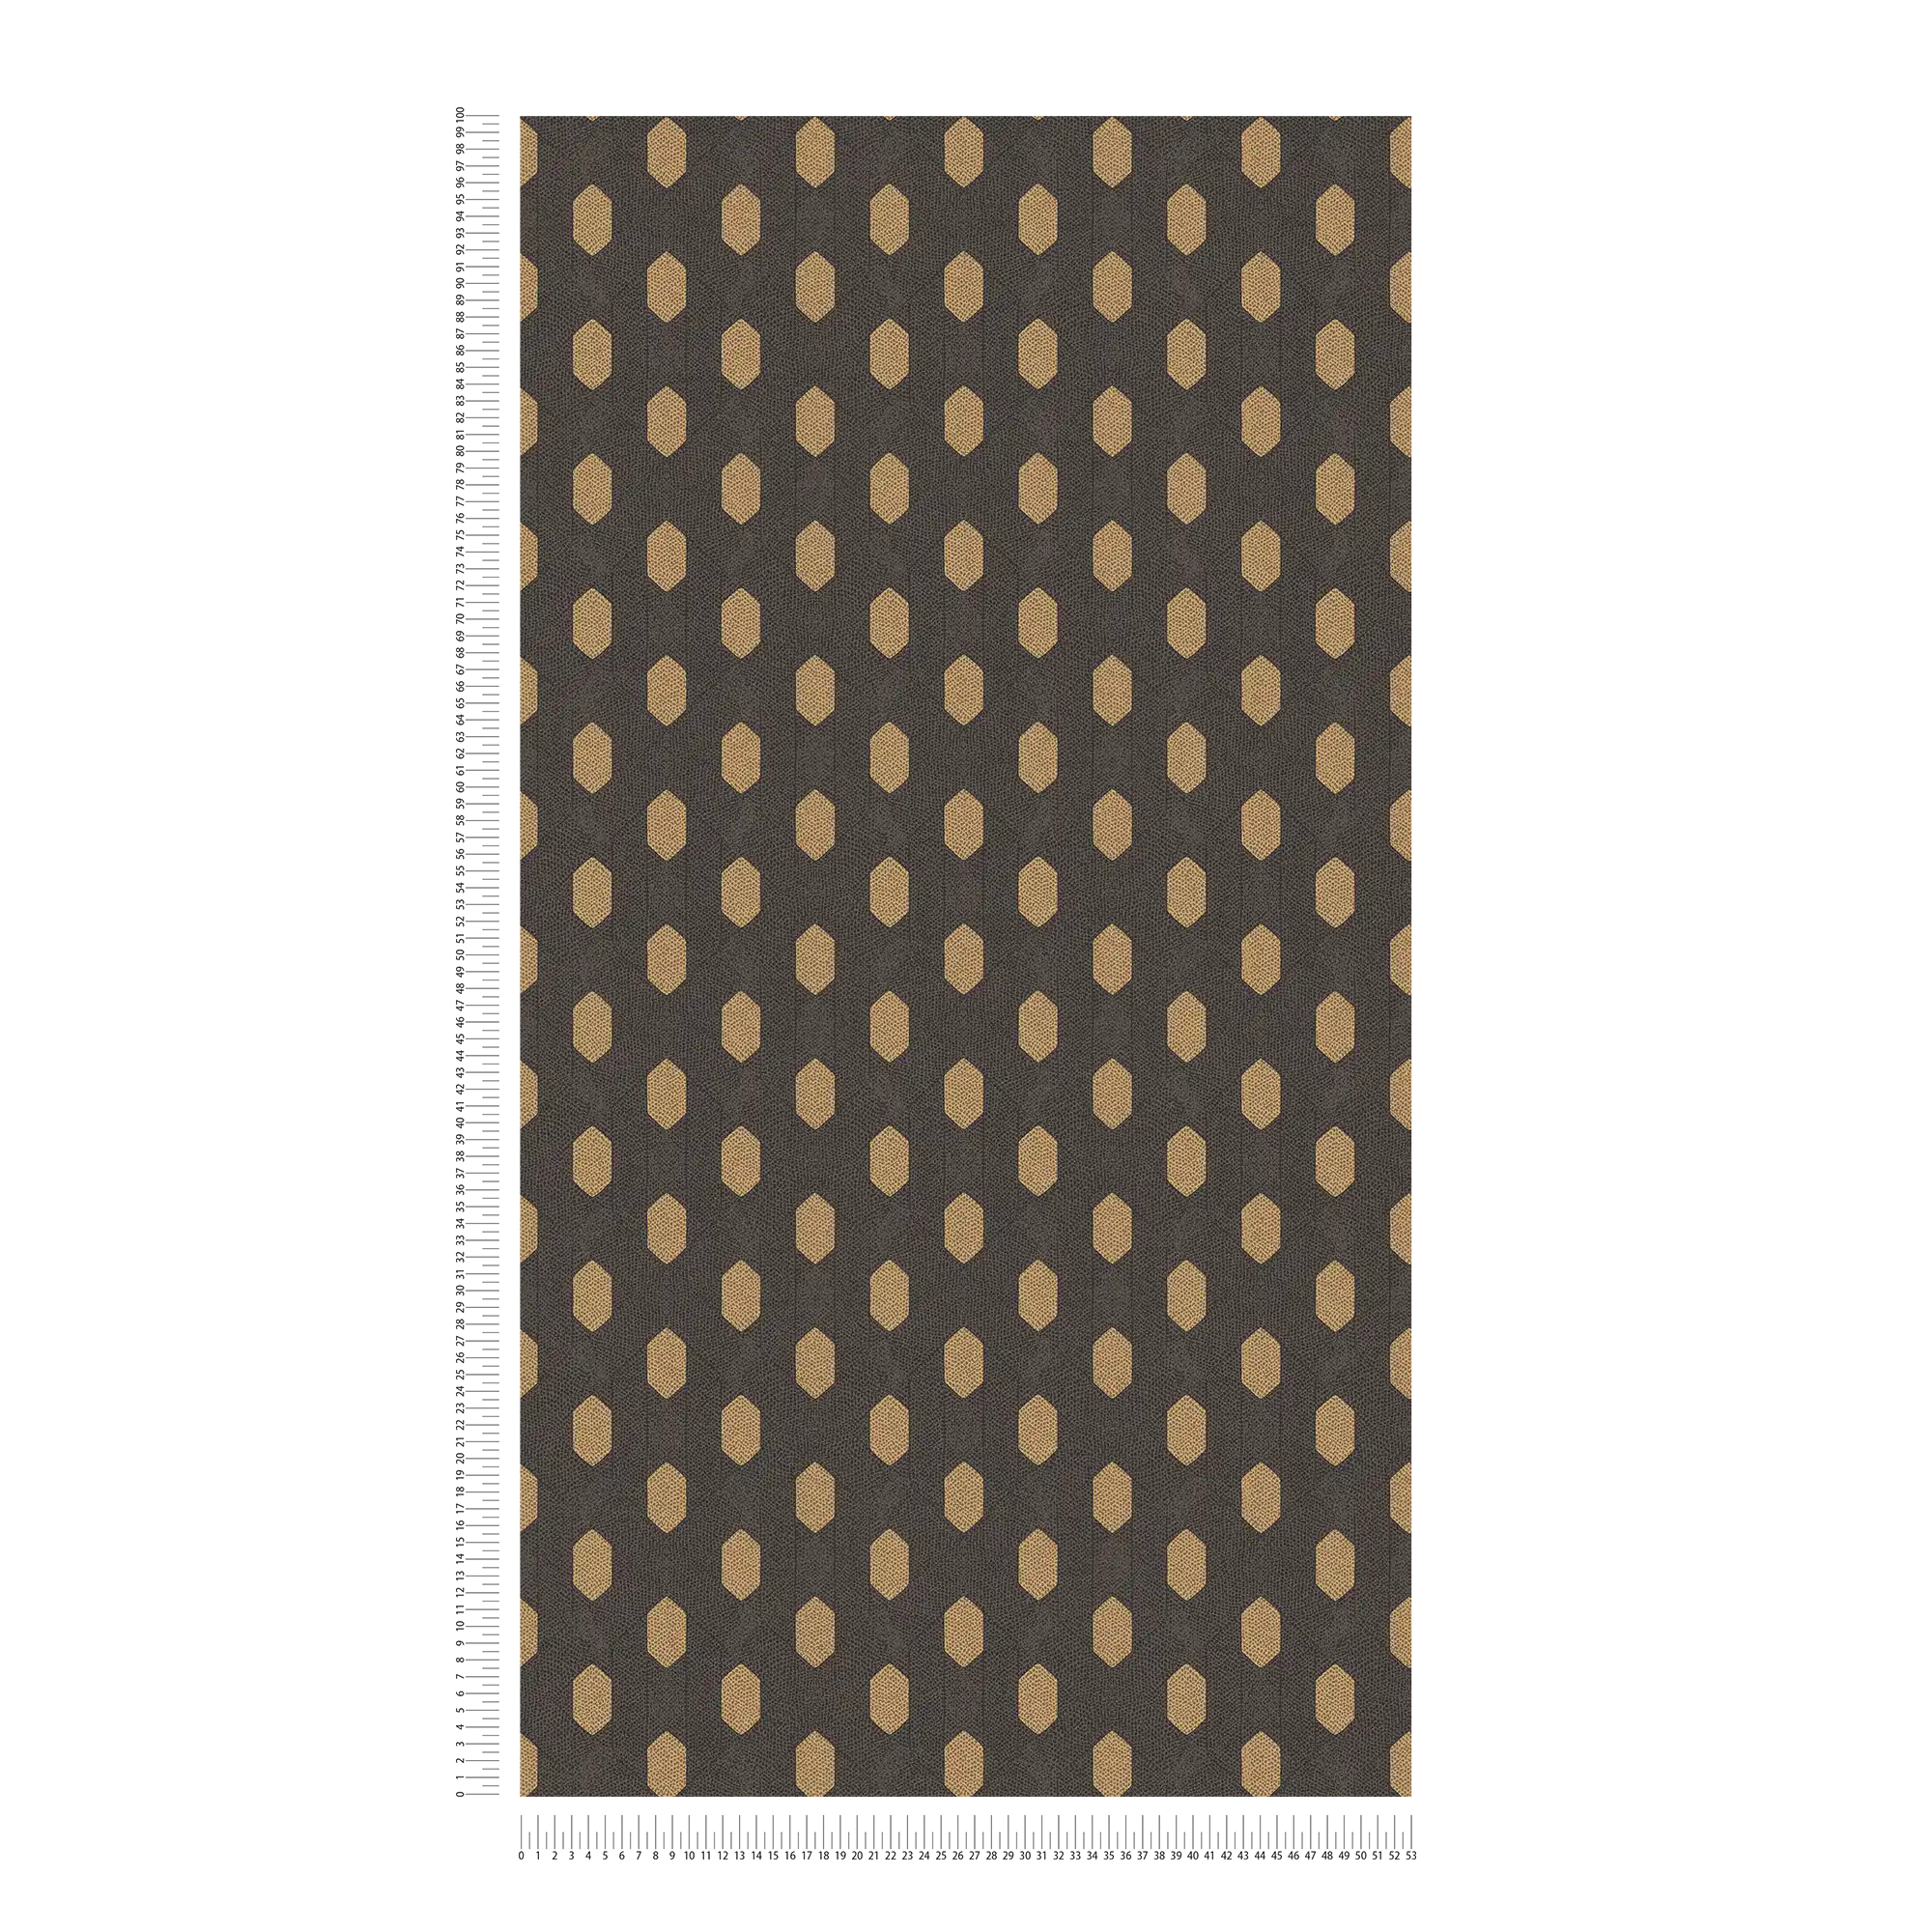             Elegant Uni-Tapete mit goldenem Muster – Schwarz, Gold, Braun
        